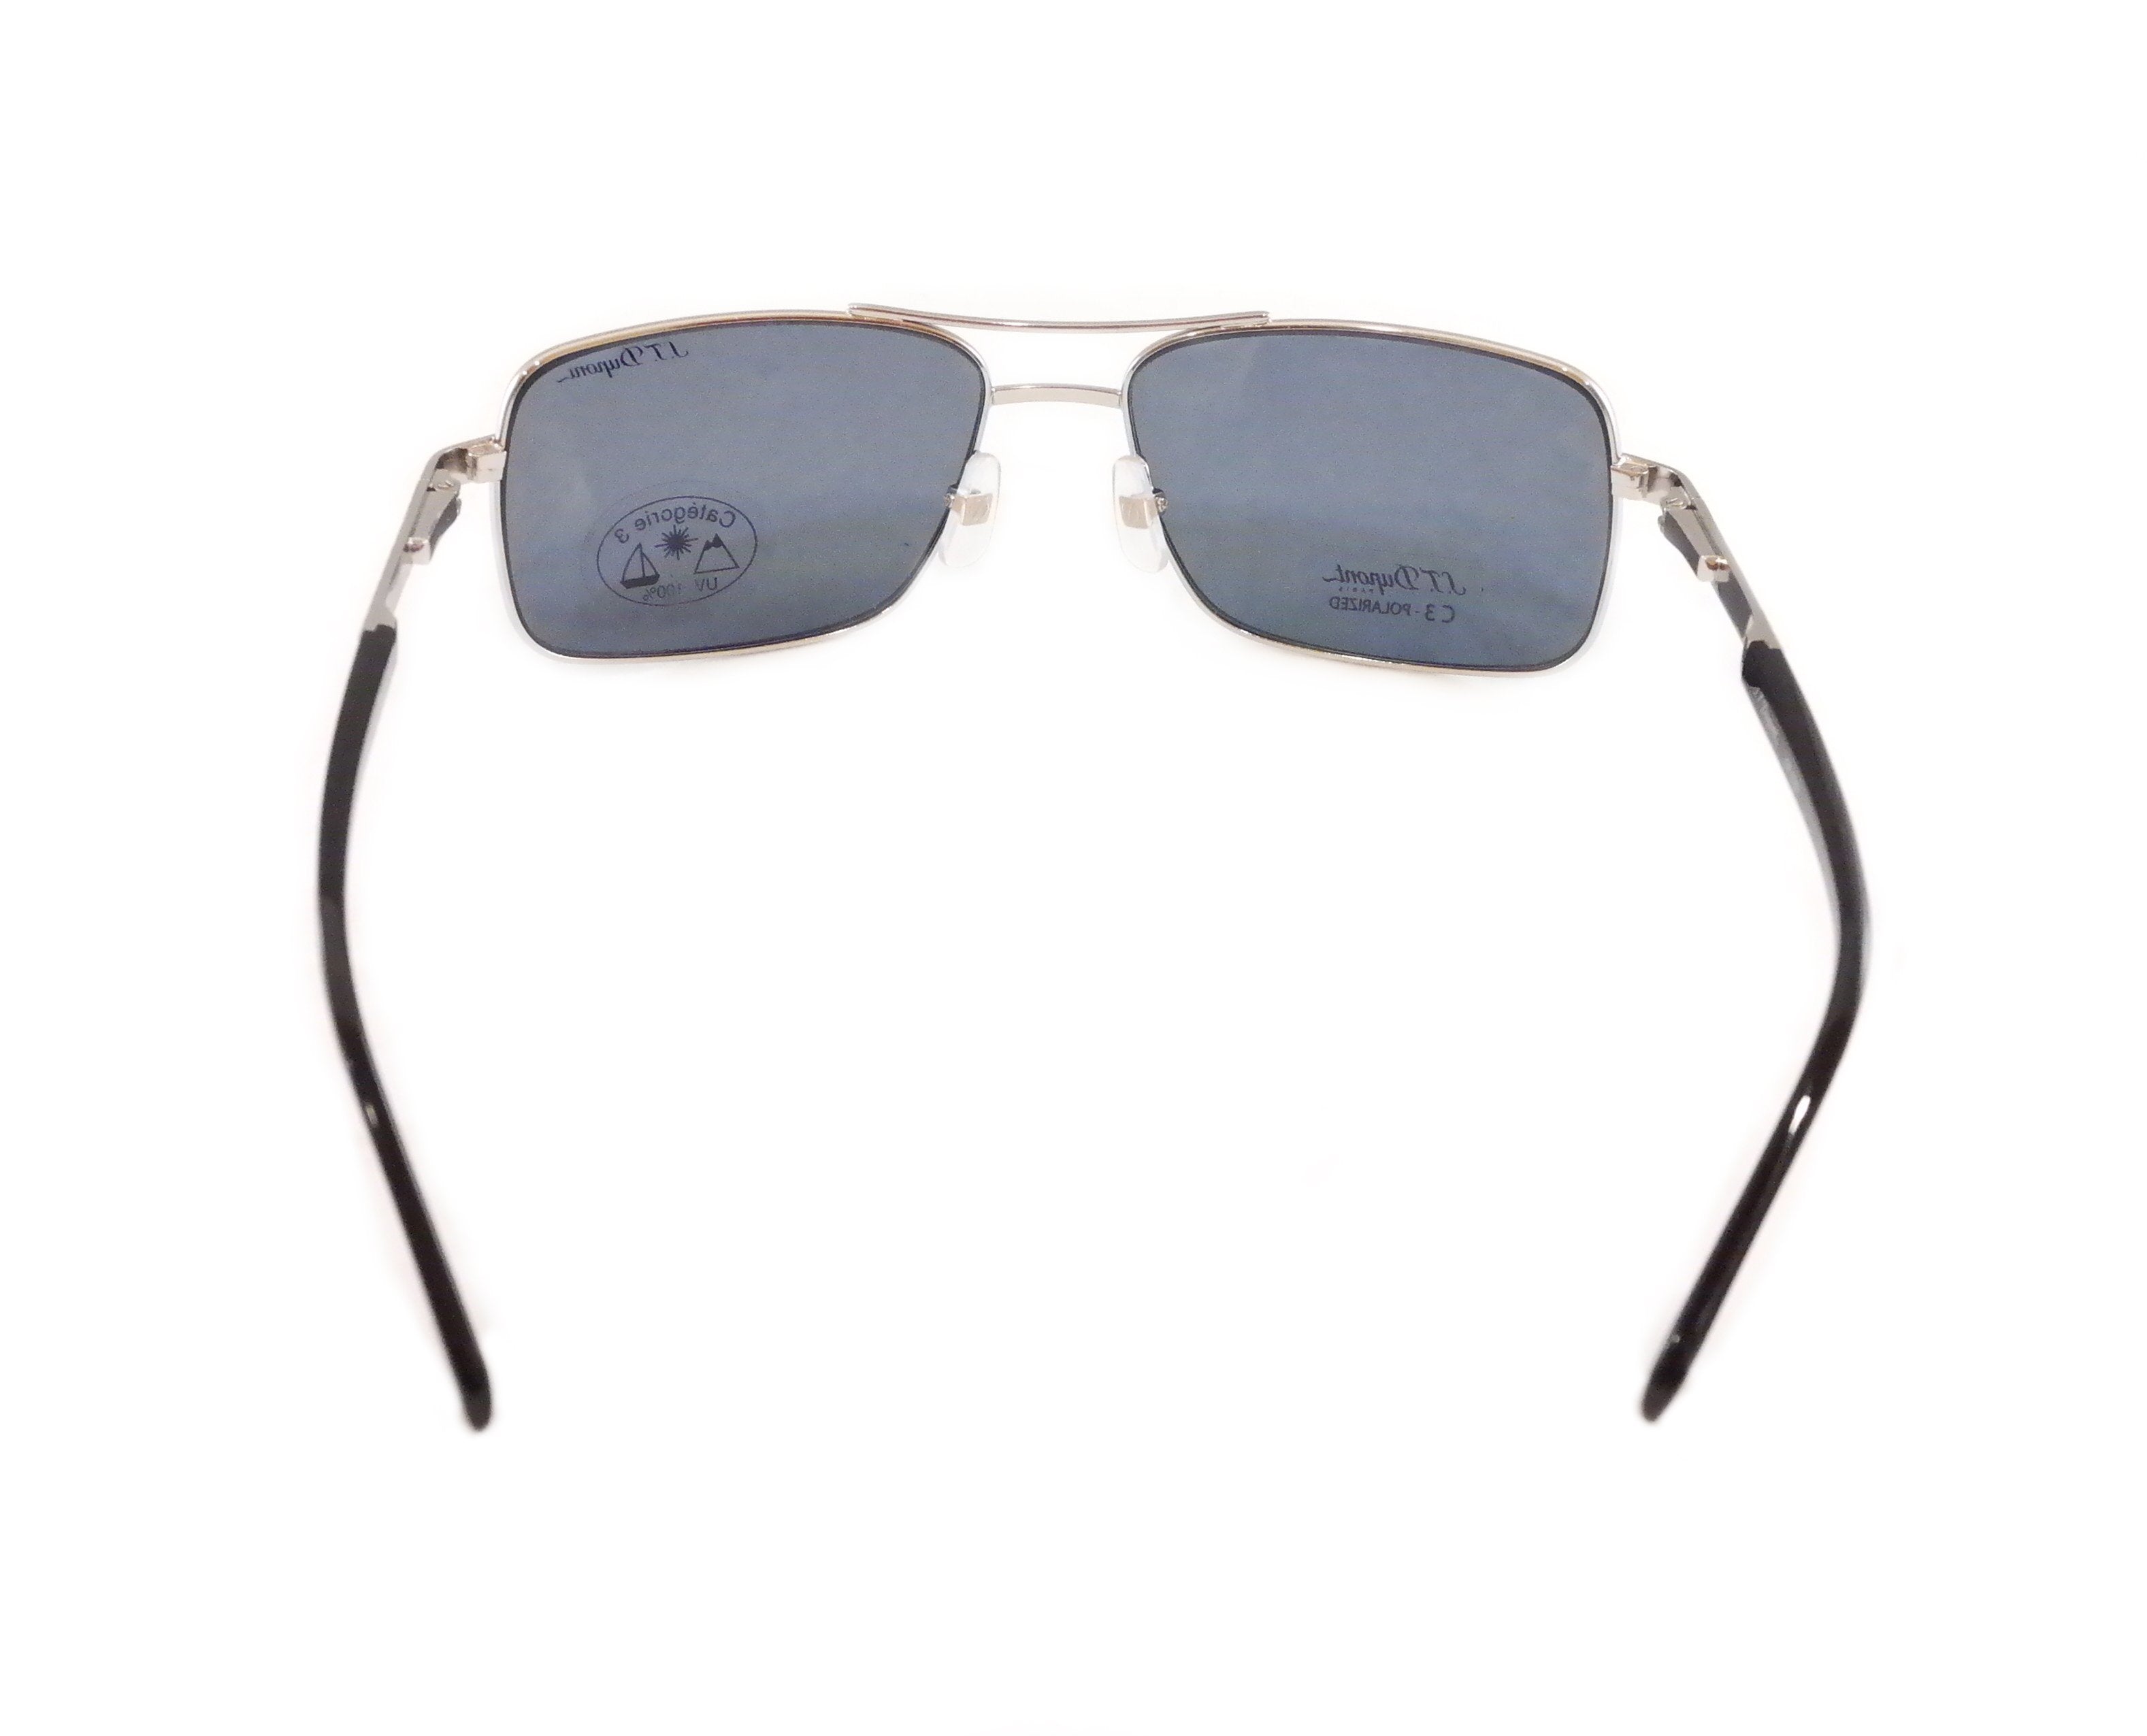 Smith Rockford Sunglasses-MatteGold AOZ-Aviator-Polarized- Cat.3 Tint 65-13  130 | eBay